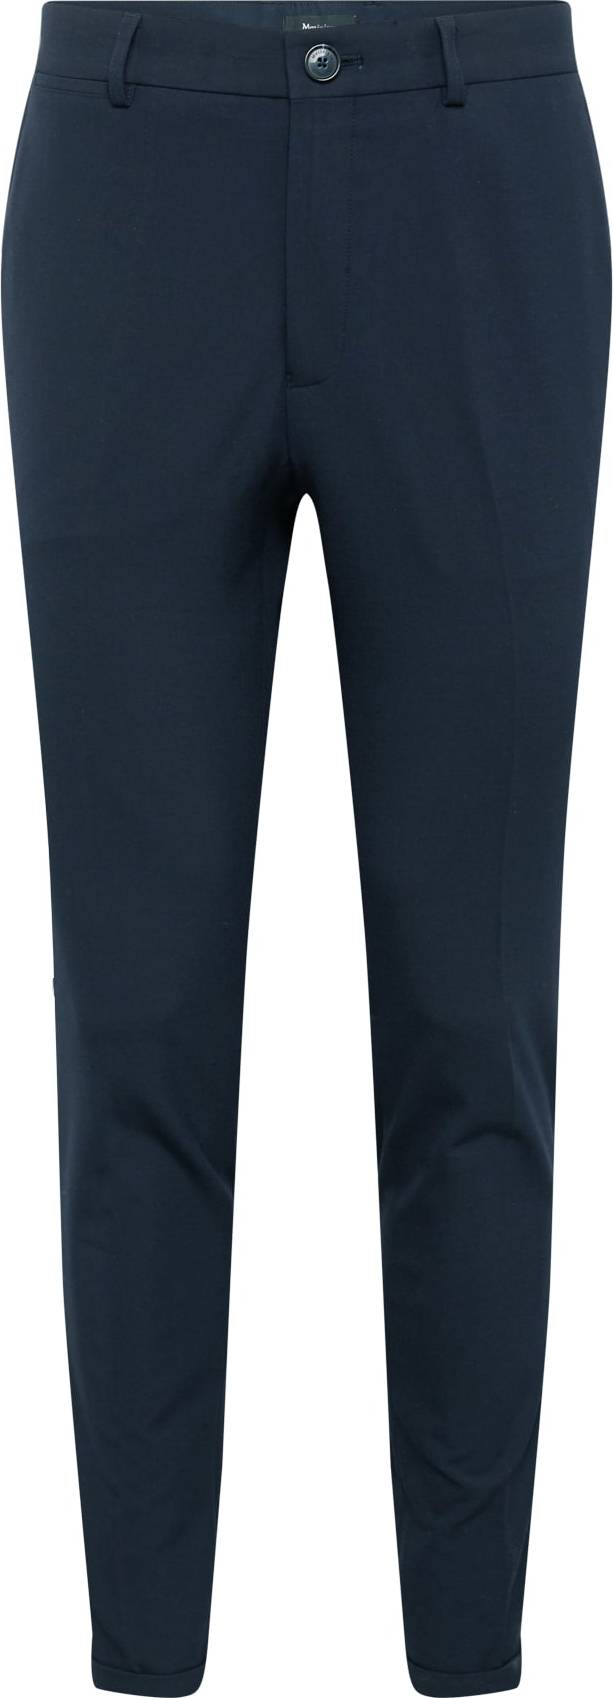 Chino kalhoty 'Liam' Matinique námořnická modř